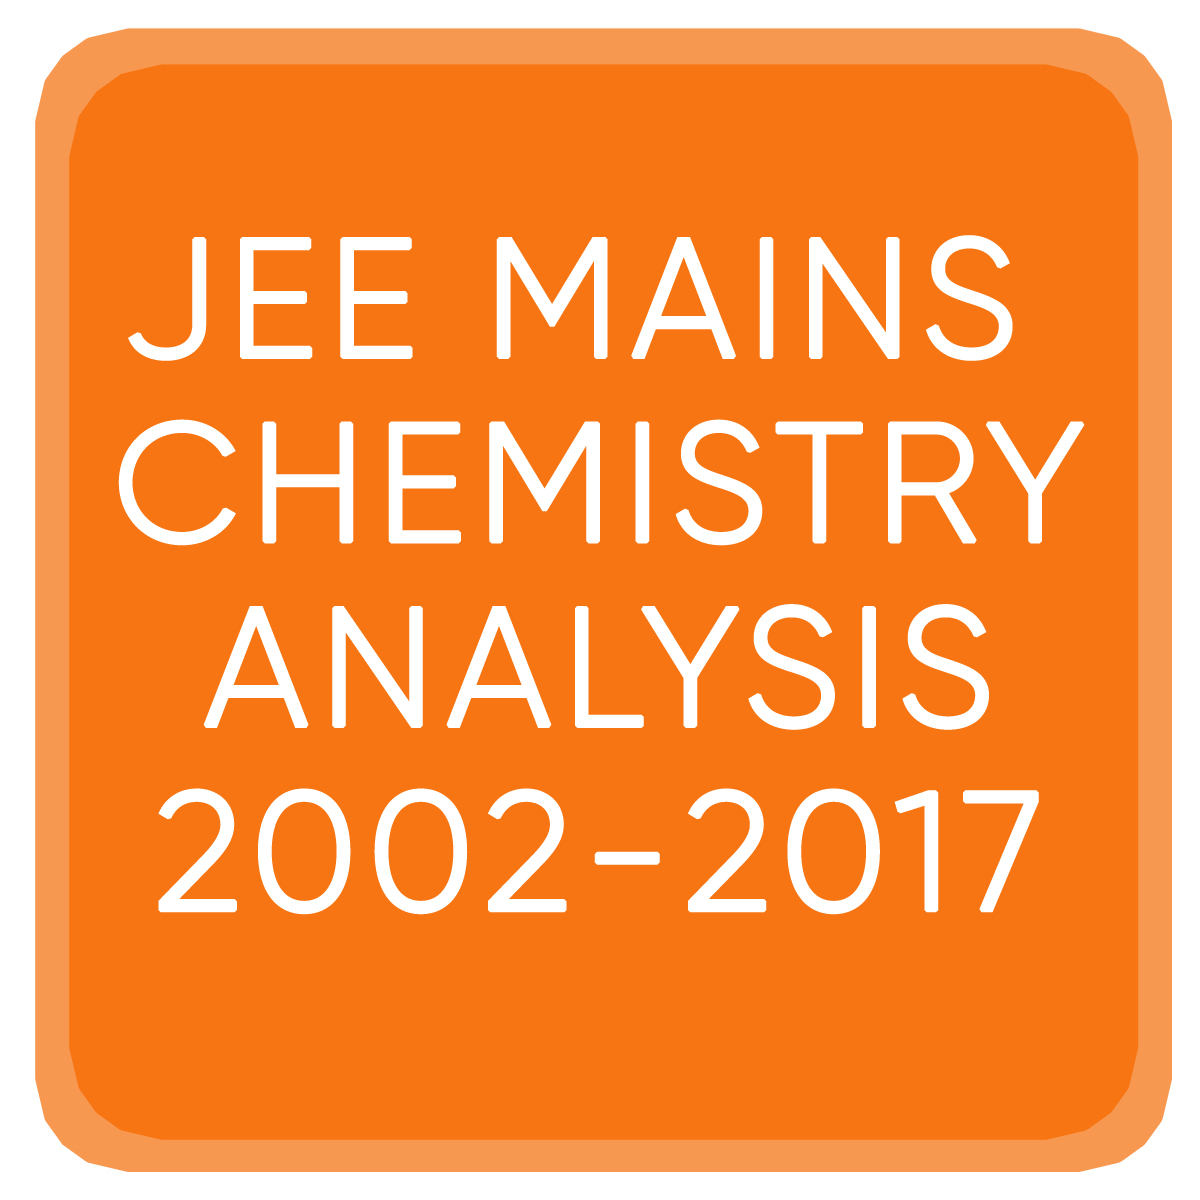 JEE MAINS CHEMISTRY ANALYSIS 2002-2017